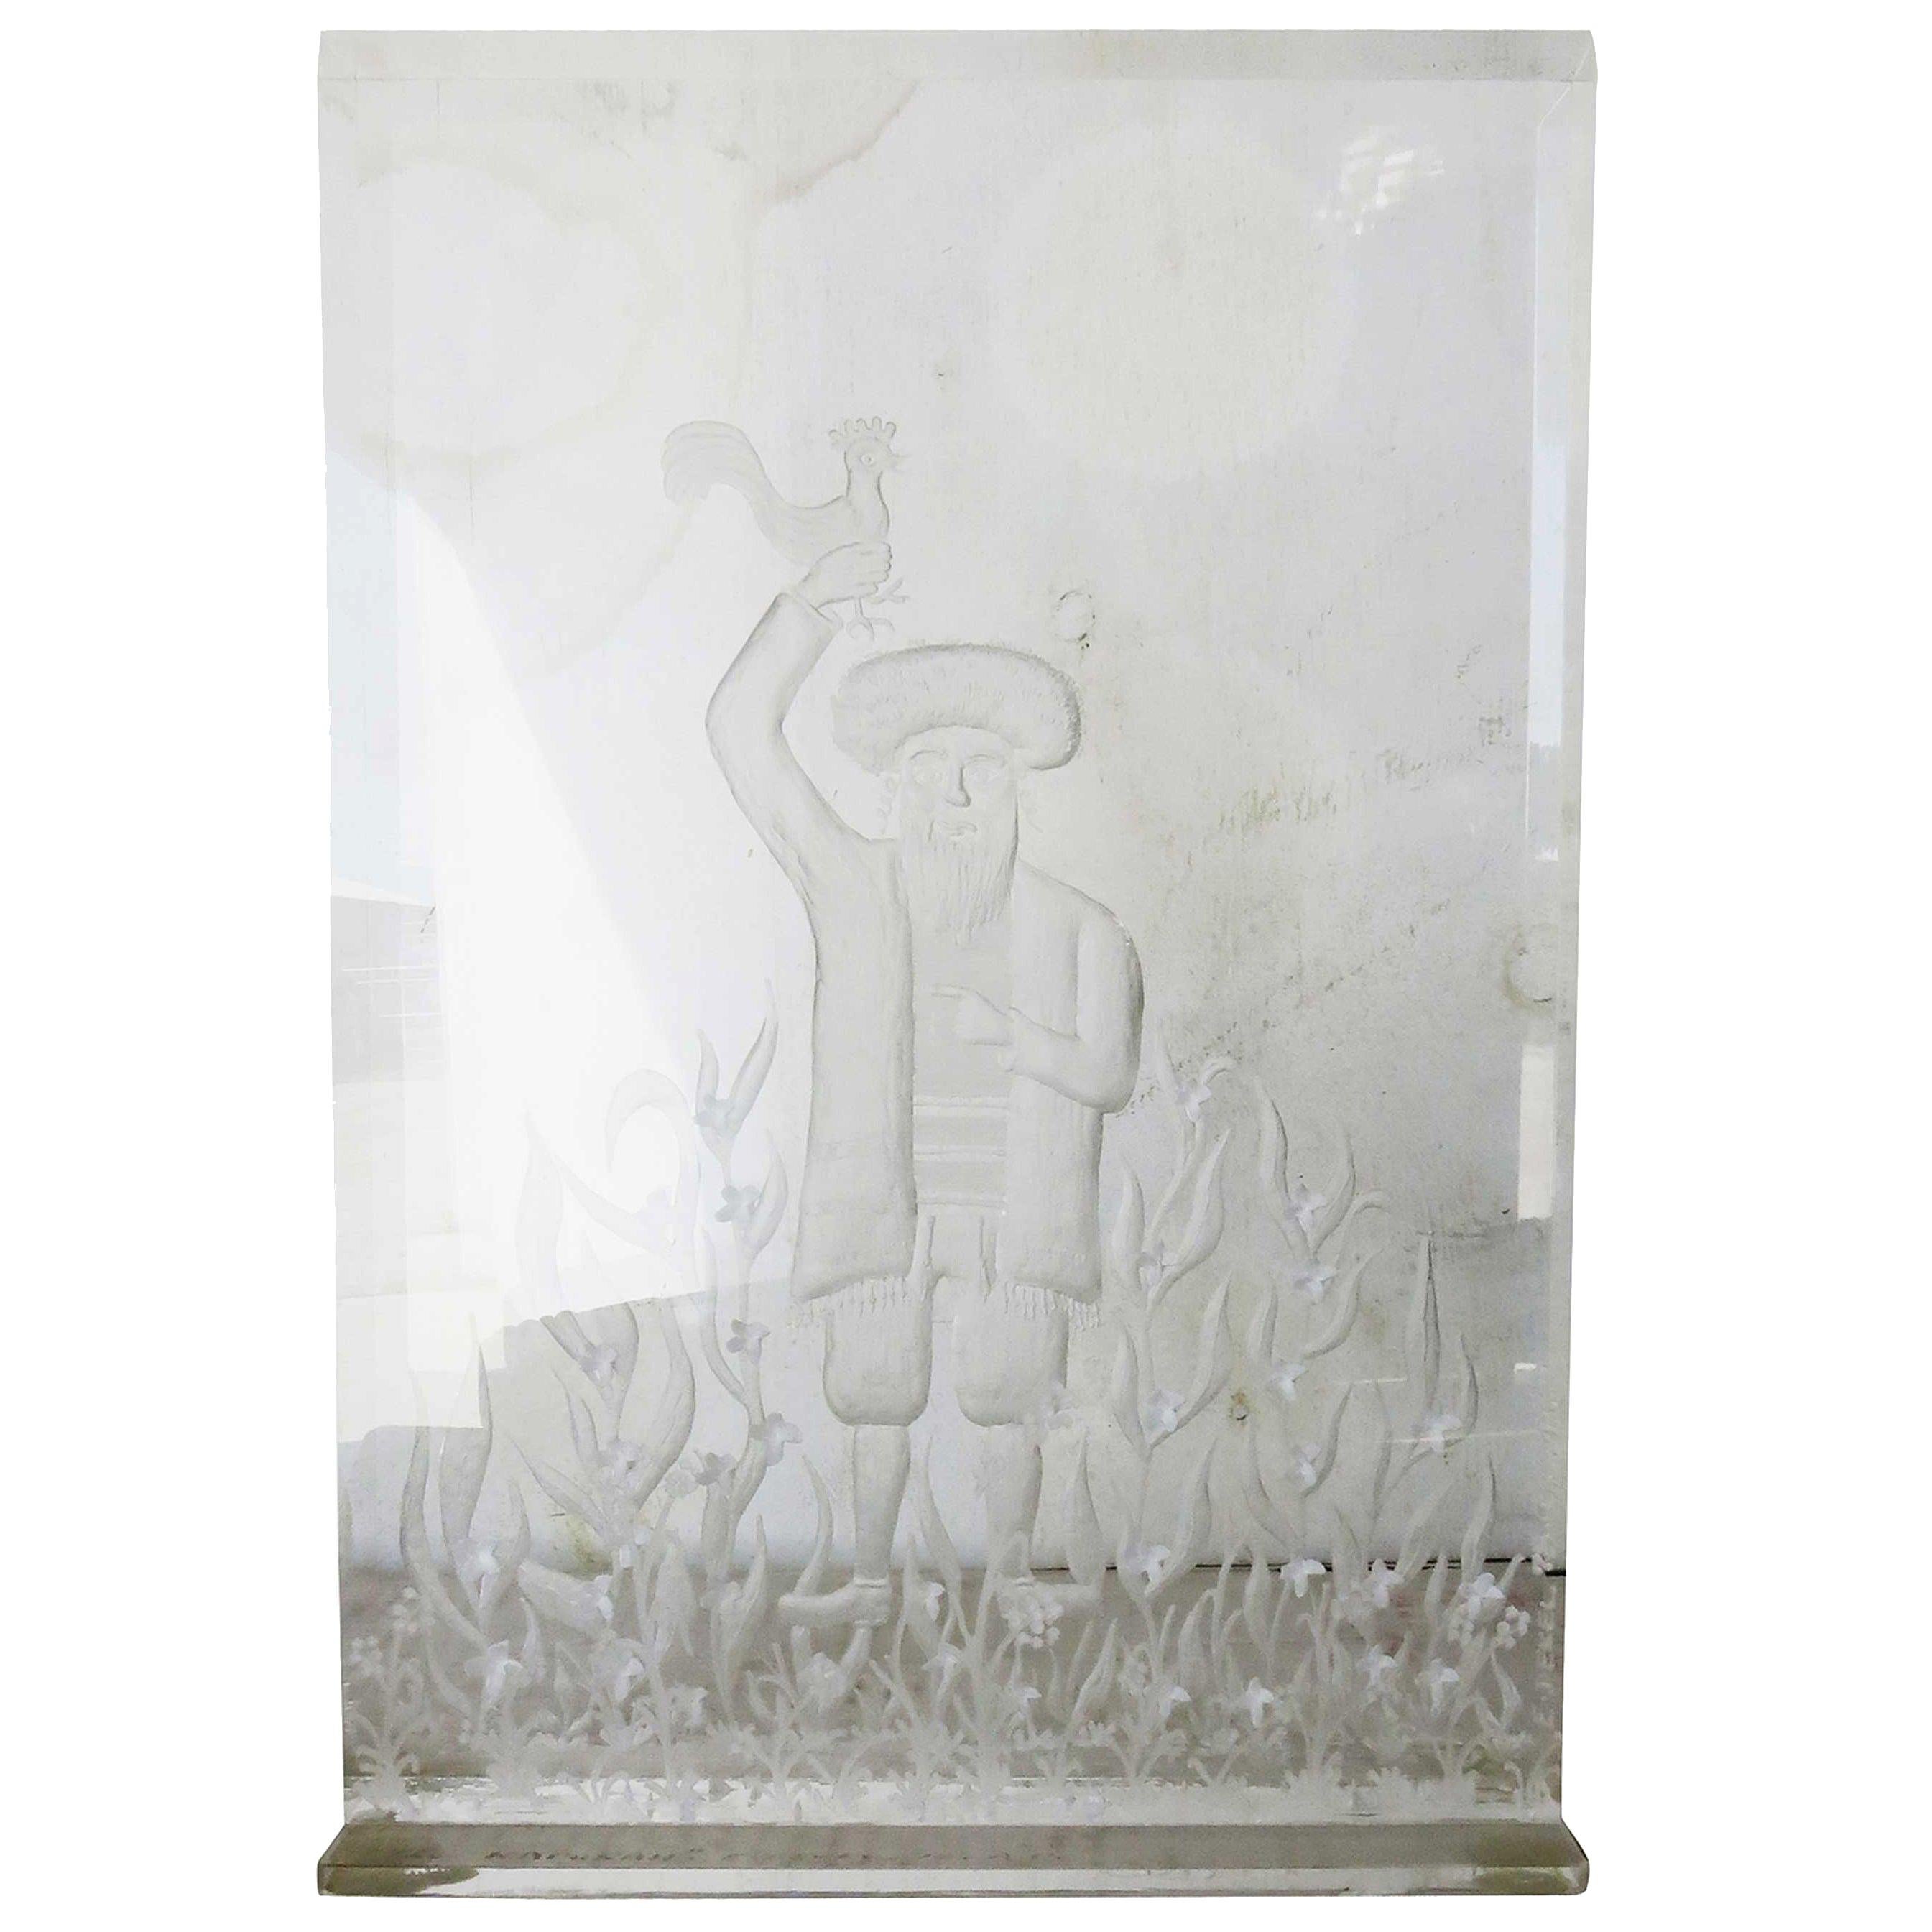 Three Dimensional "Yom Kippur" Etched Acrylic Block Art by Dekel